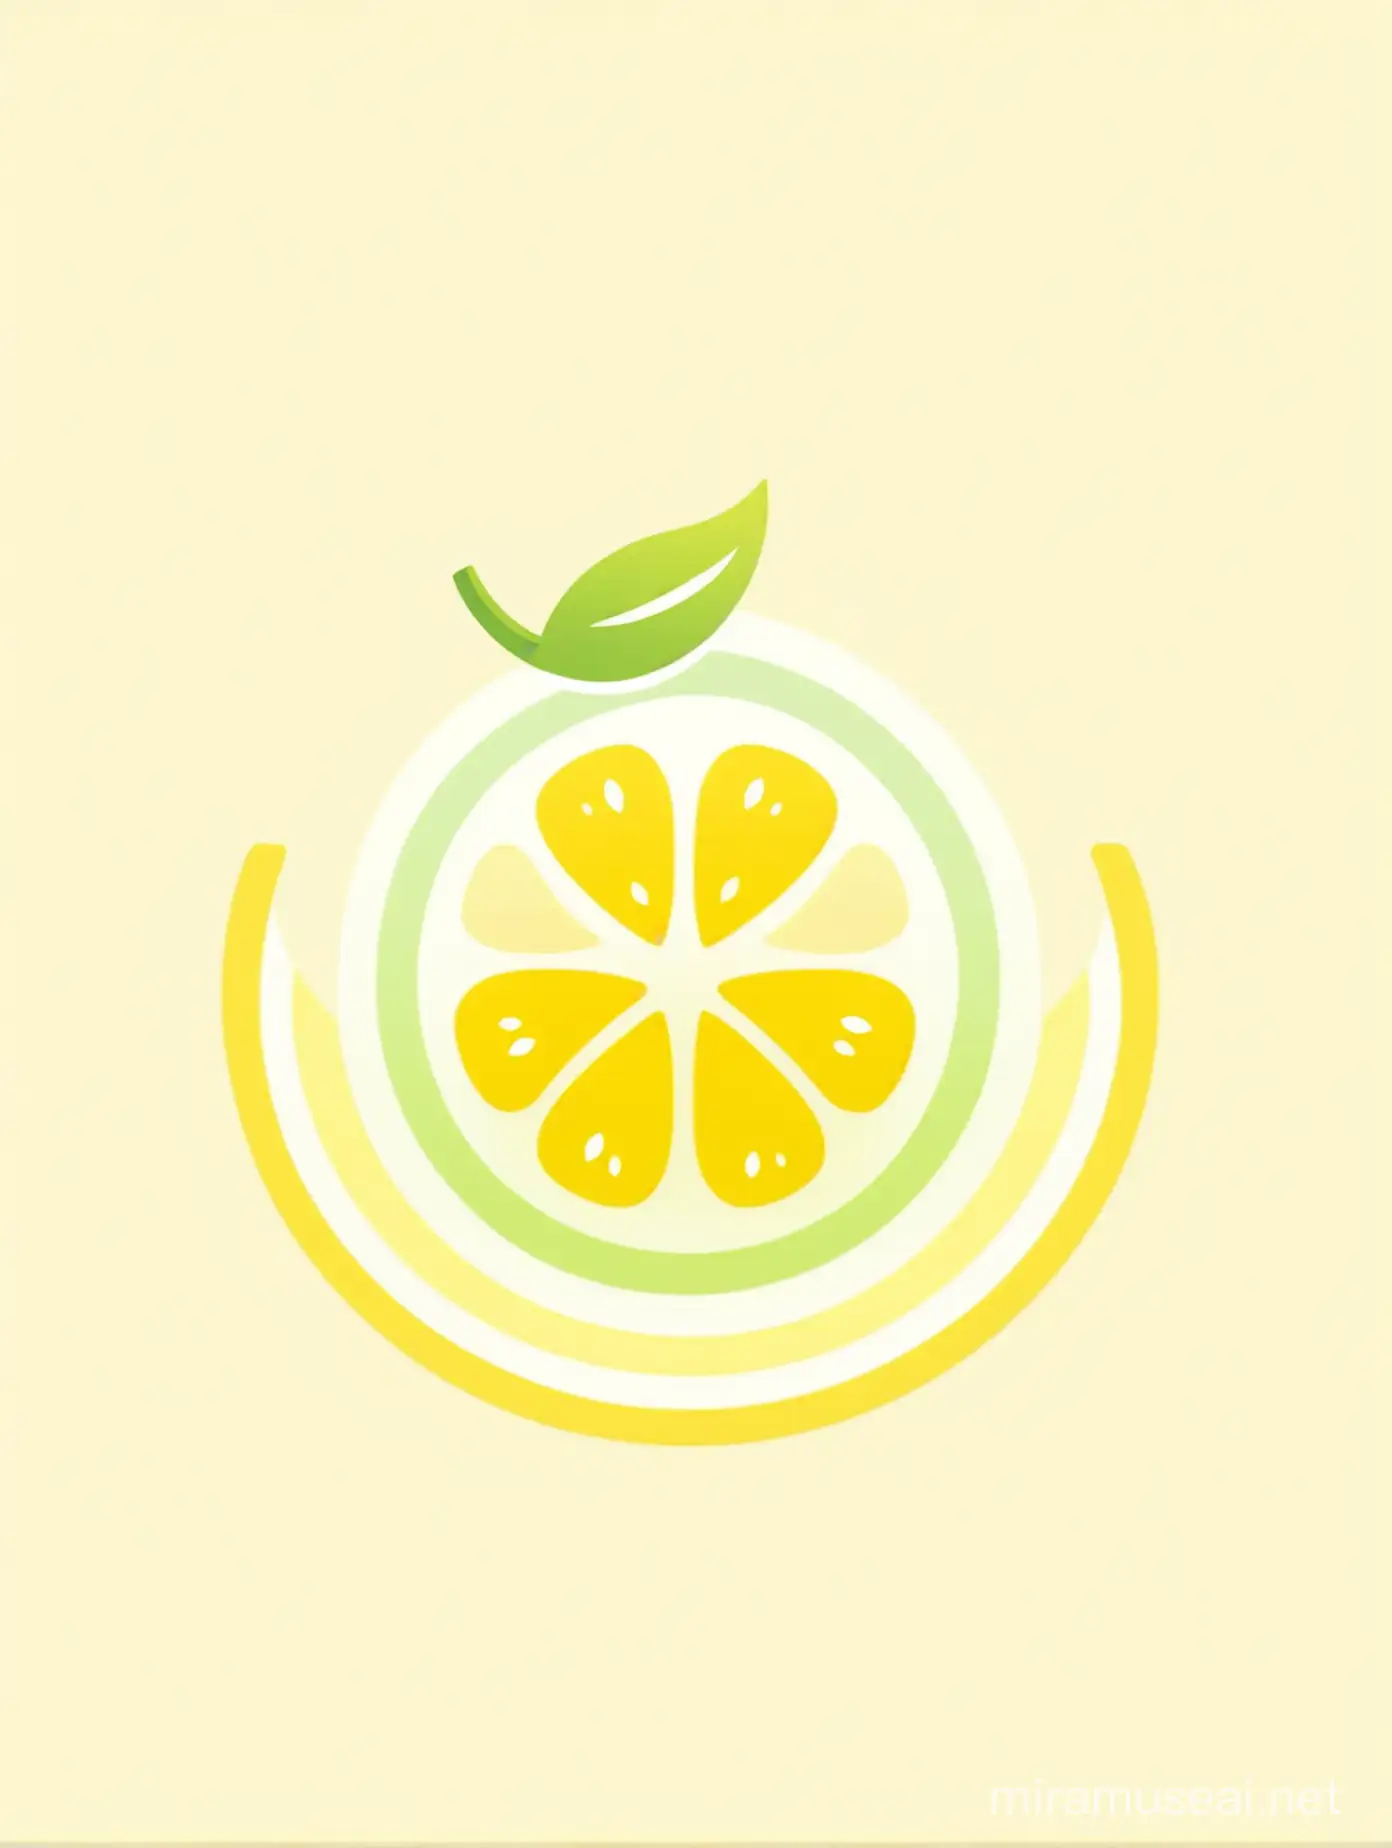 lemon logo on a white background for a wellness app, using pastel lemon colors only.